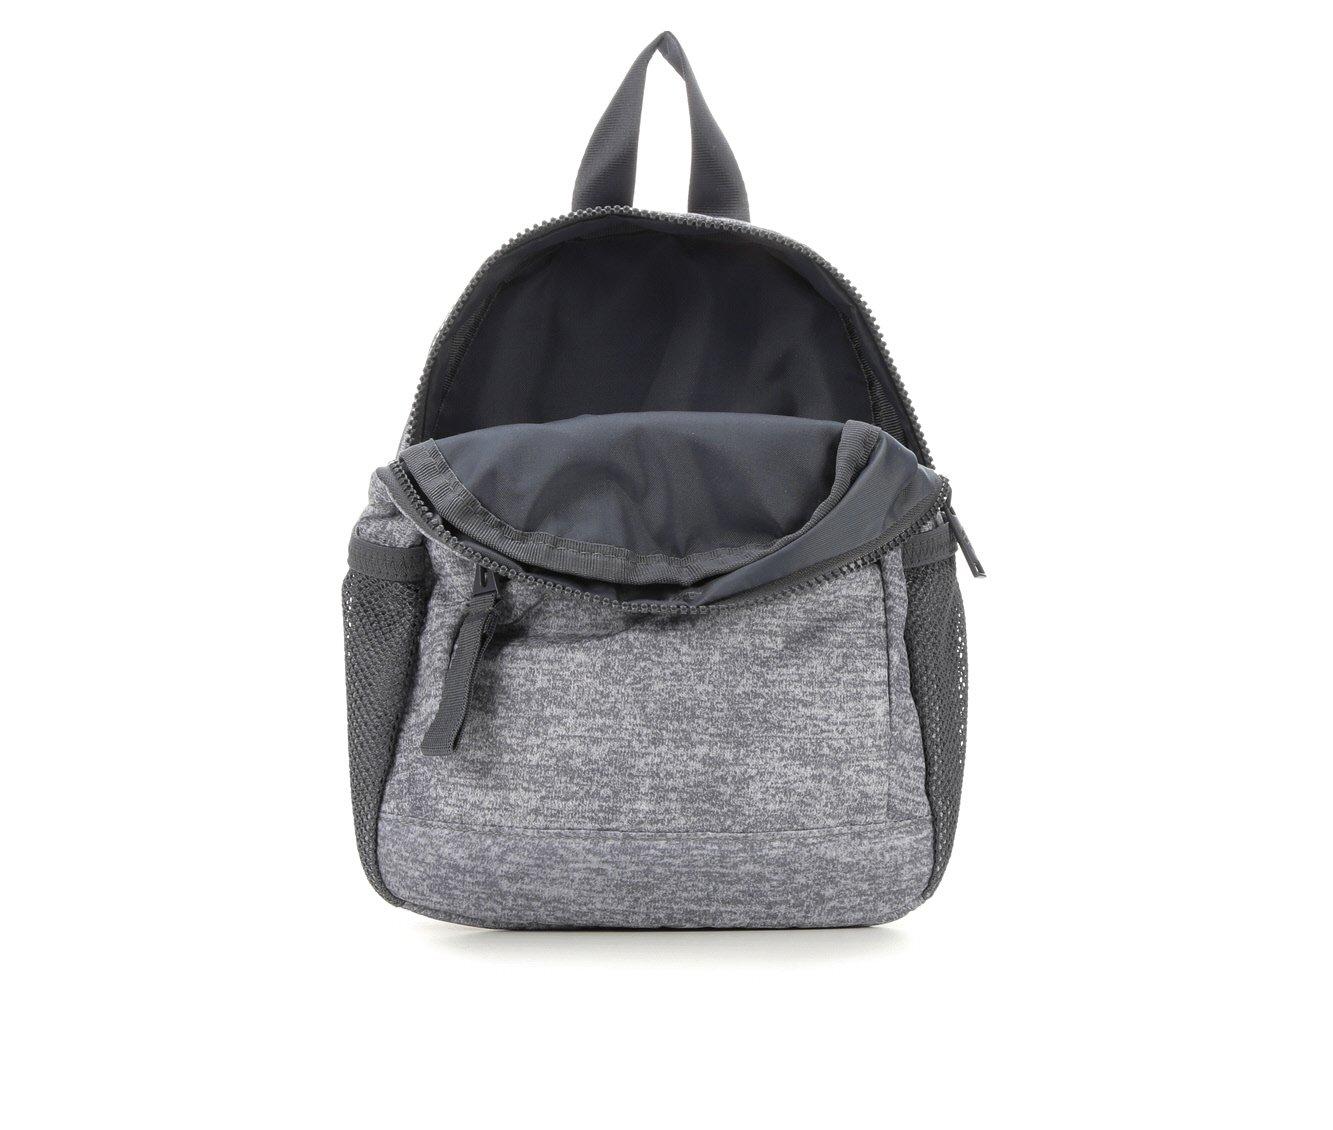 Adidas Linear Mini Backpack